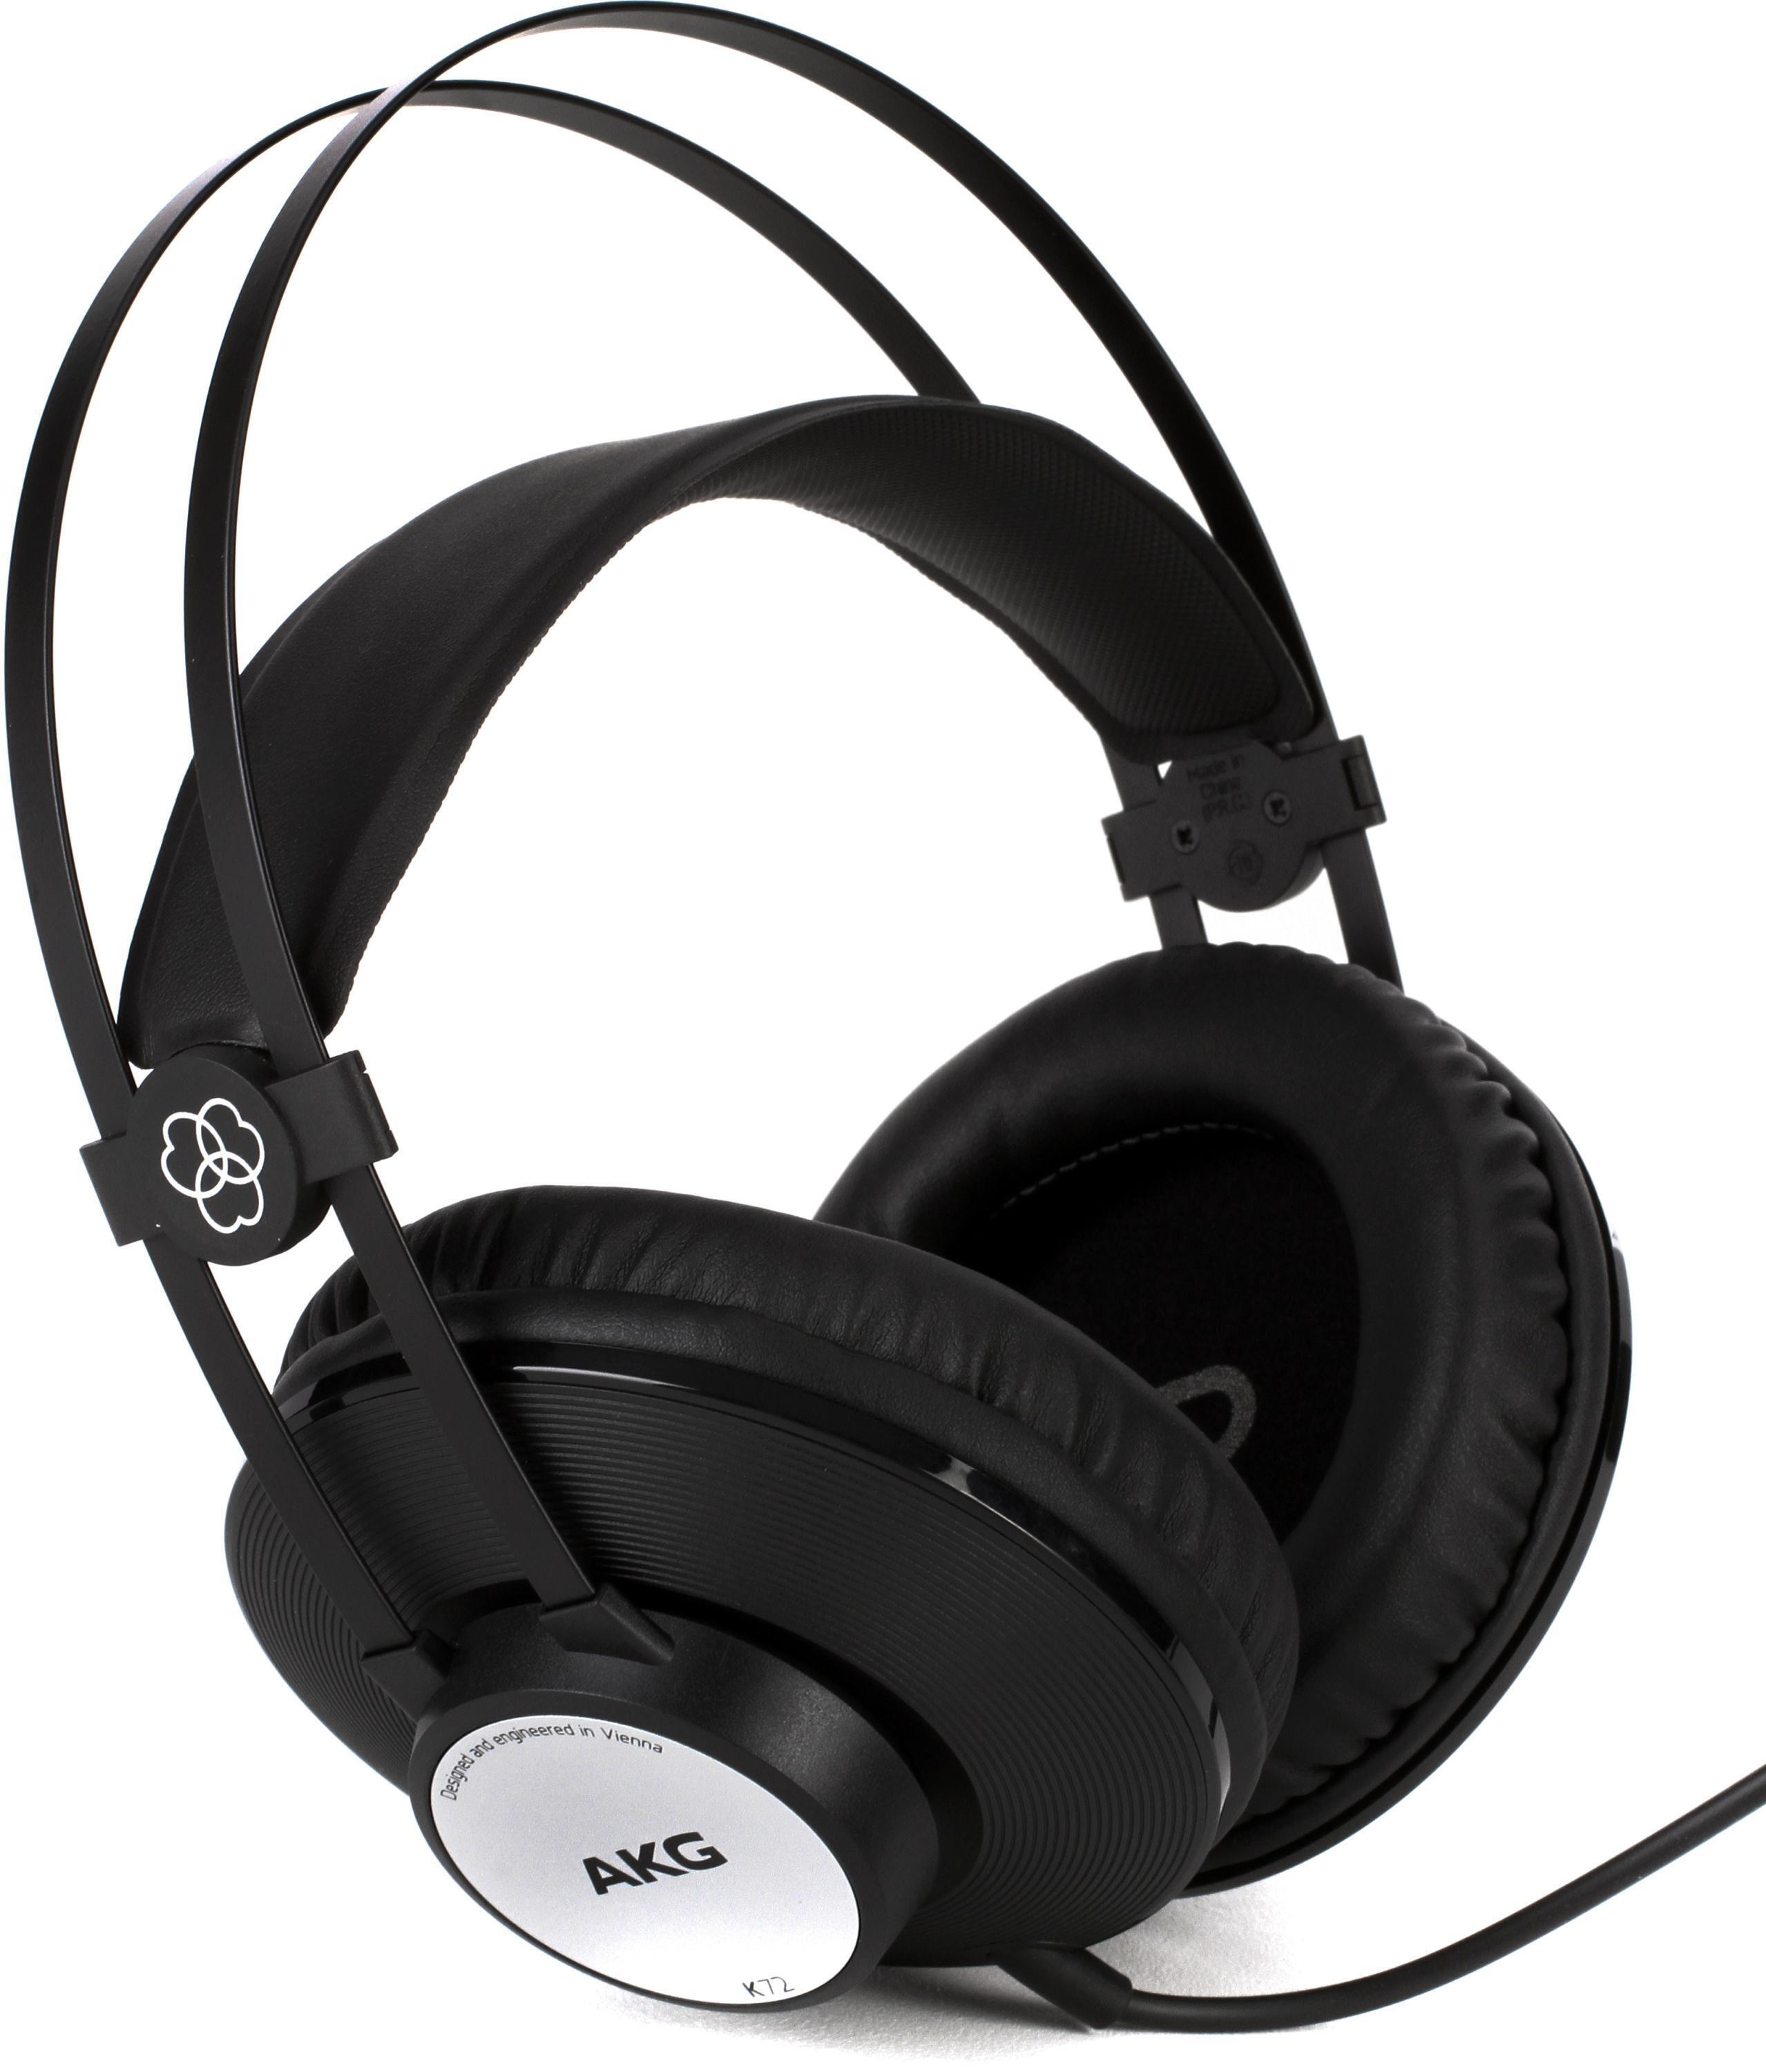 BUDGET AKG Headphones - AKG K52 Review 